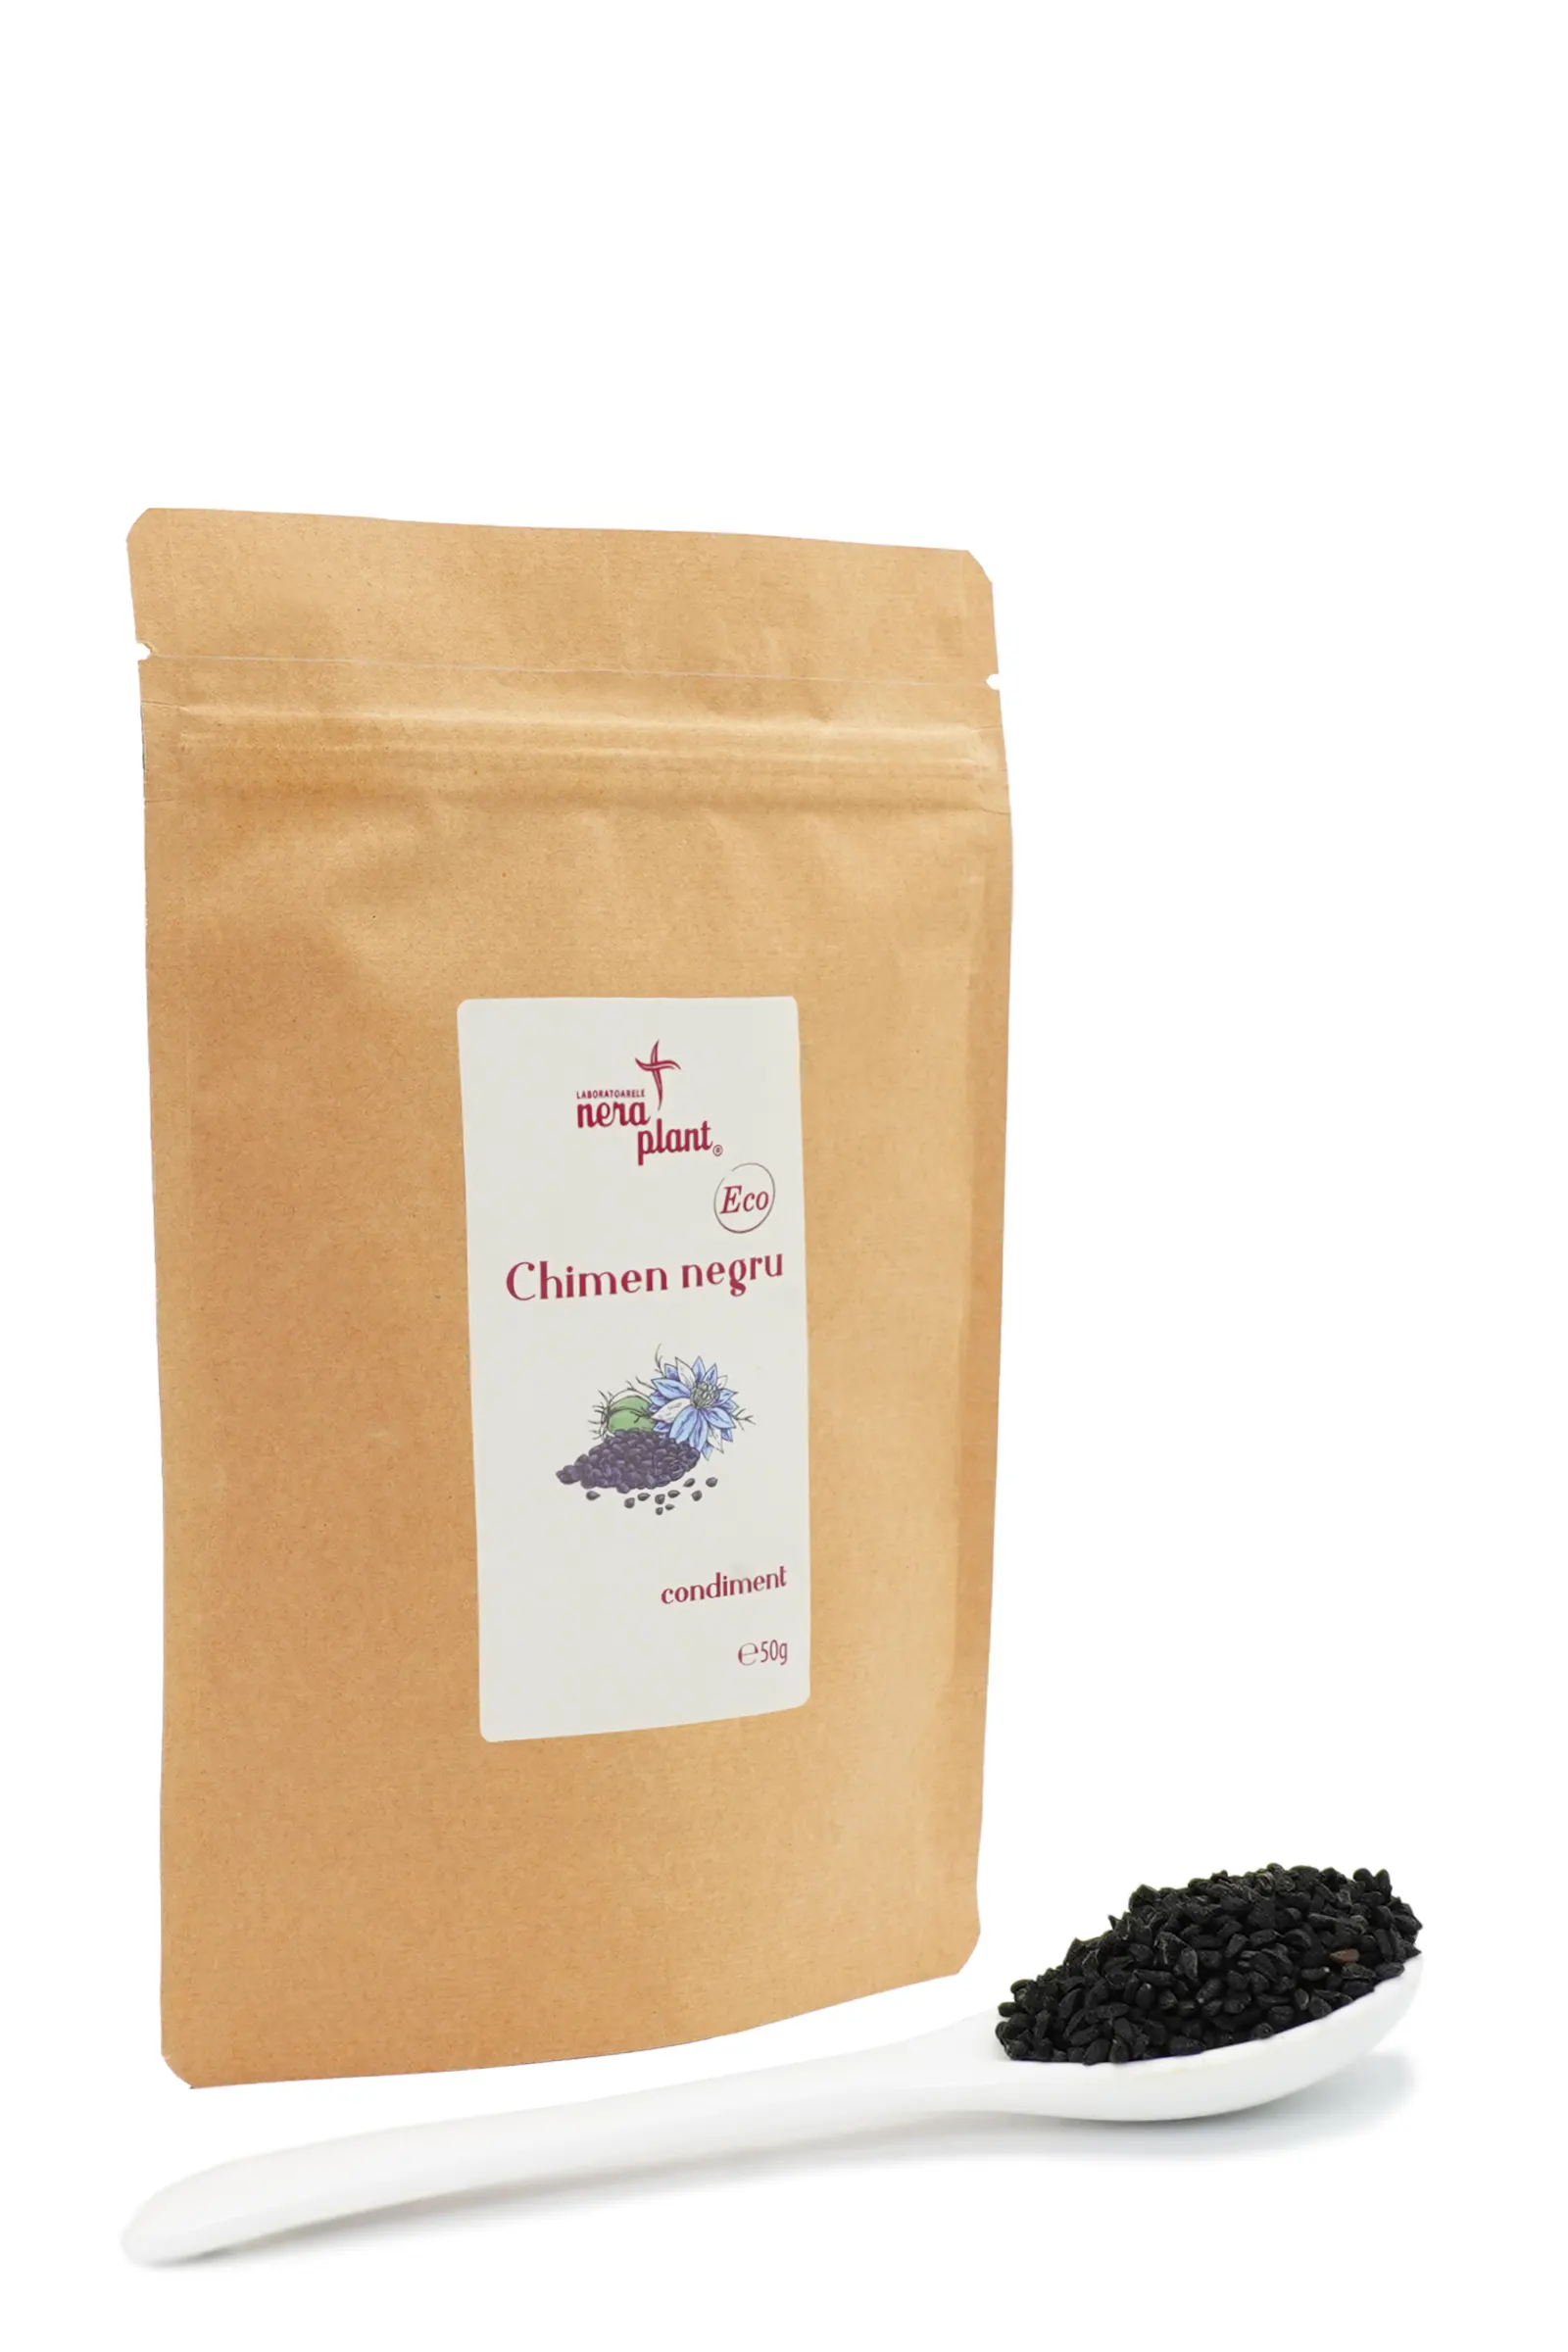 Condiment nera plant chimen negru ECO 50g